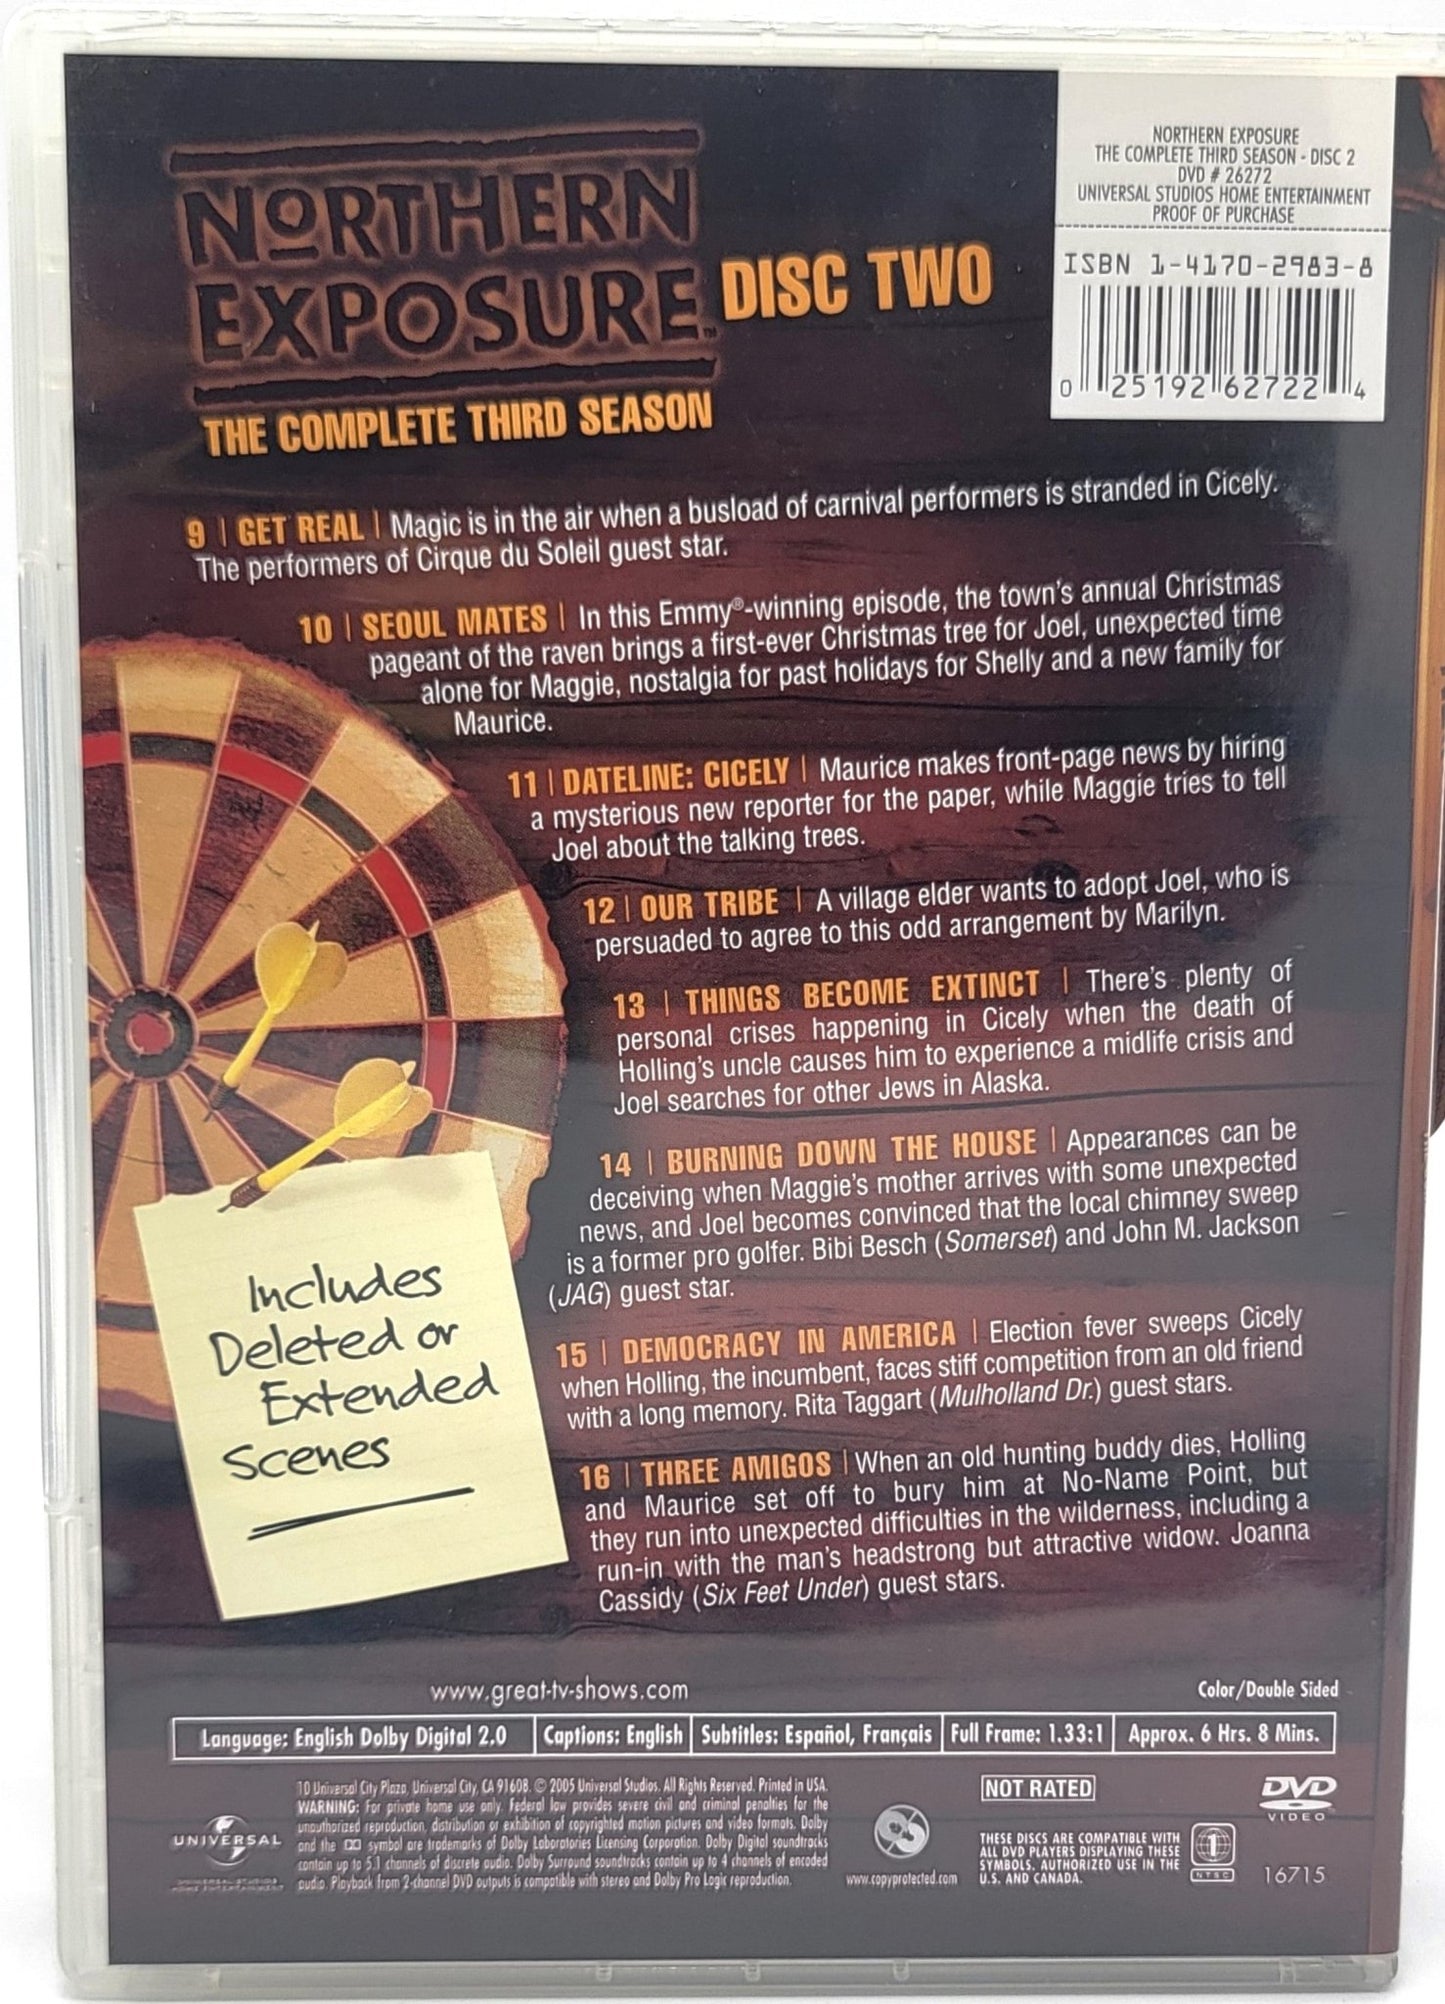 Universal Studios - Northern Exposure | DVD | The Complete Third Season - DVD - Steady Bunny Shop